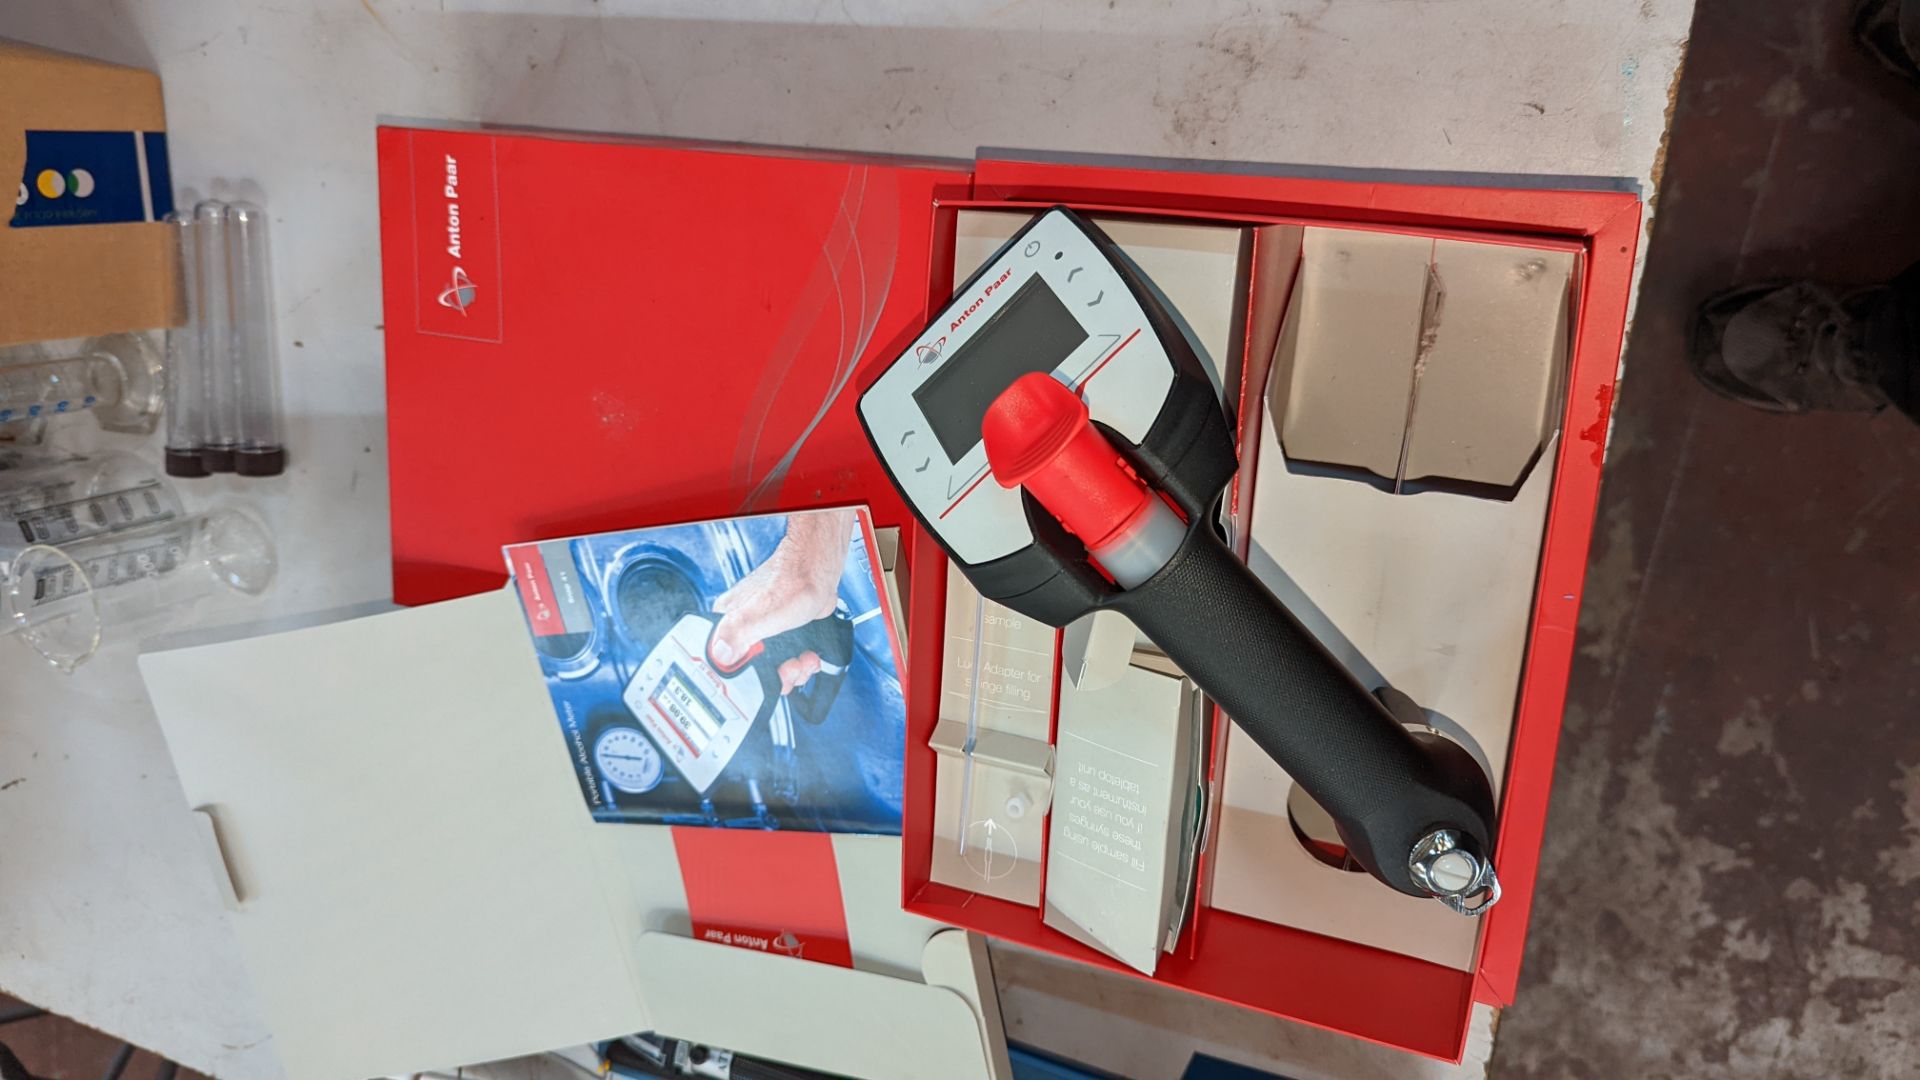 Anton Paar Snap 41 portable alcohol meter/digital hydrometer including box, manual & ancillaries